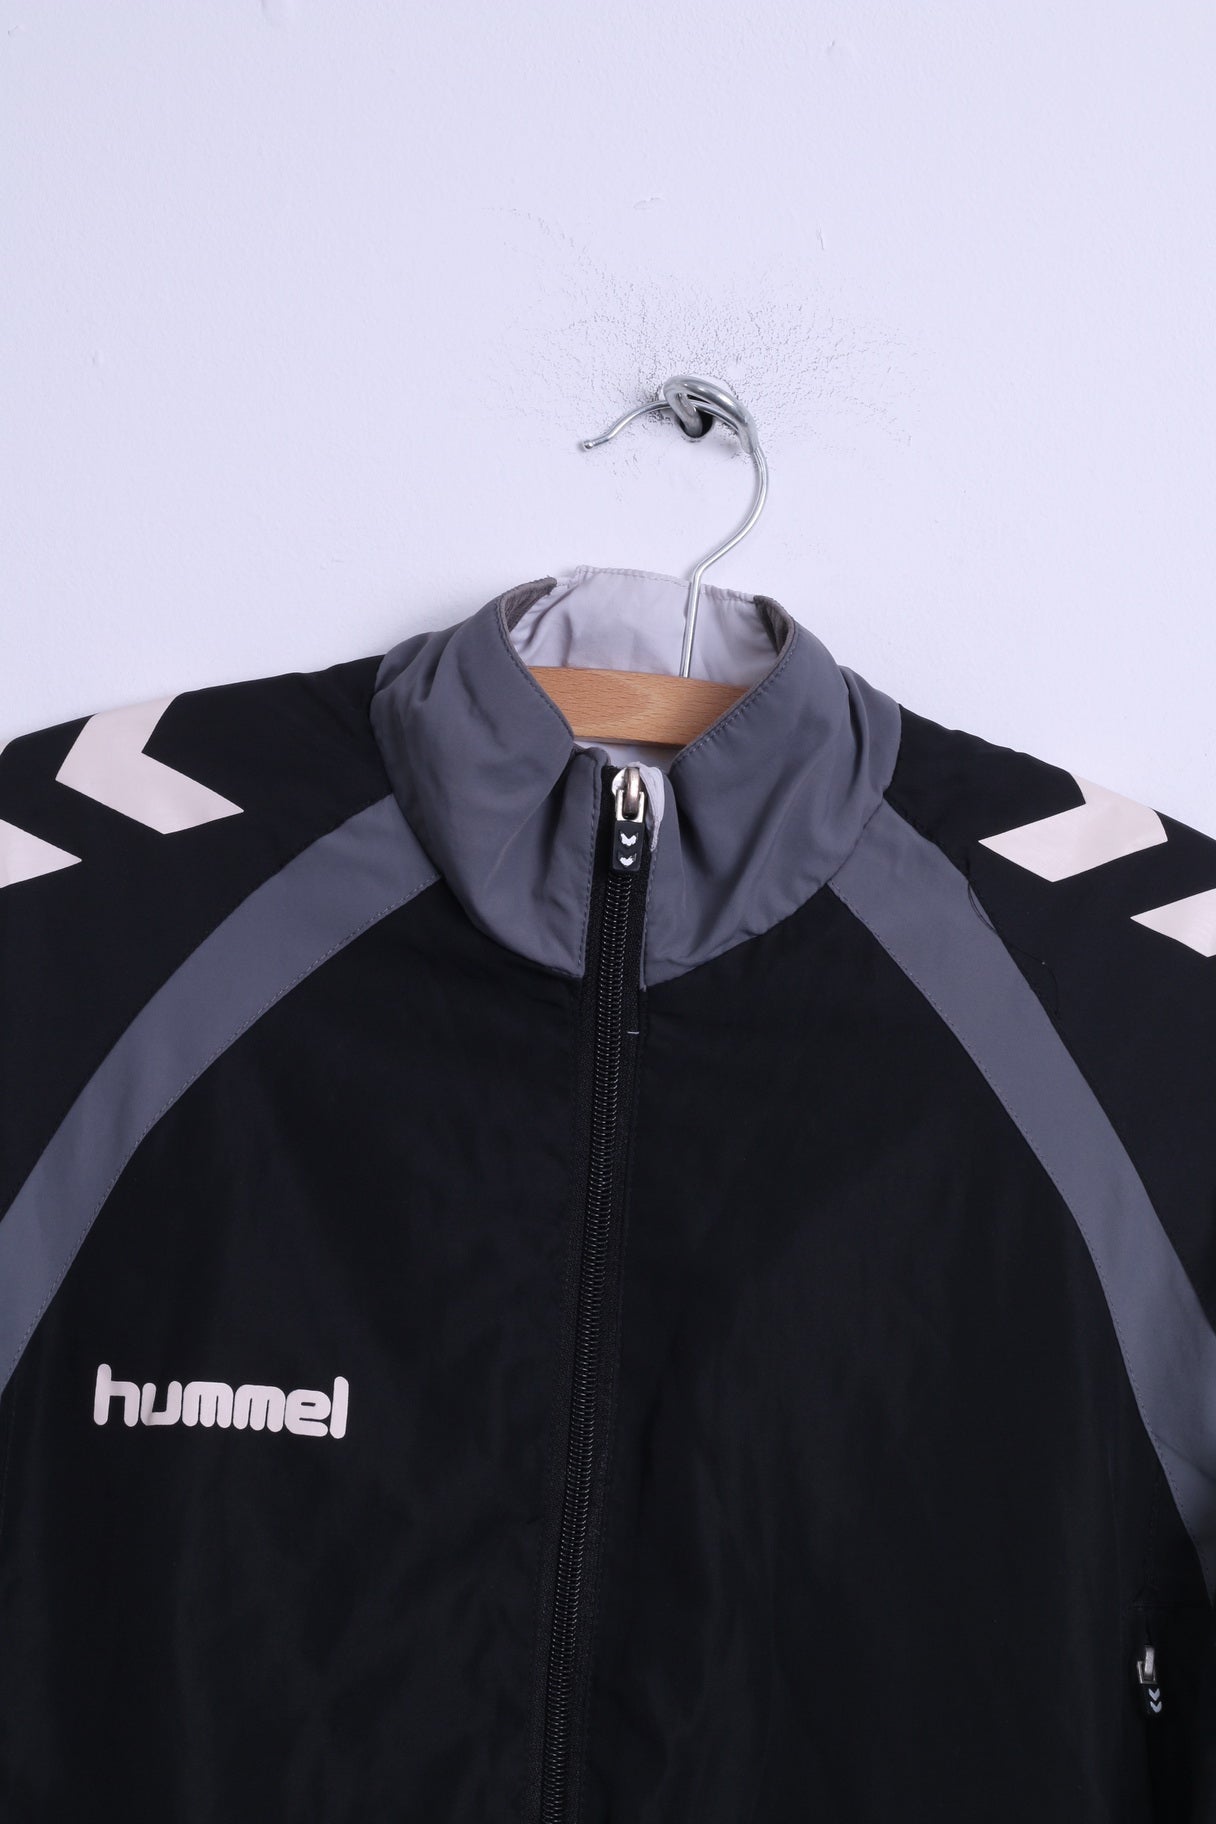 Hummel Mens S Track Top Jacket Black Zip Up Lightweight Training Sport  Top